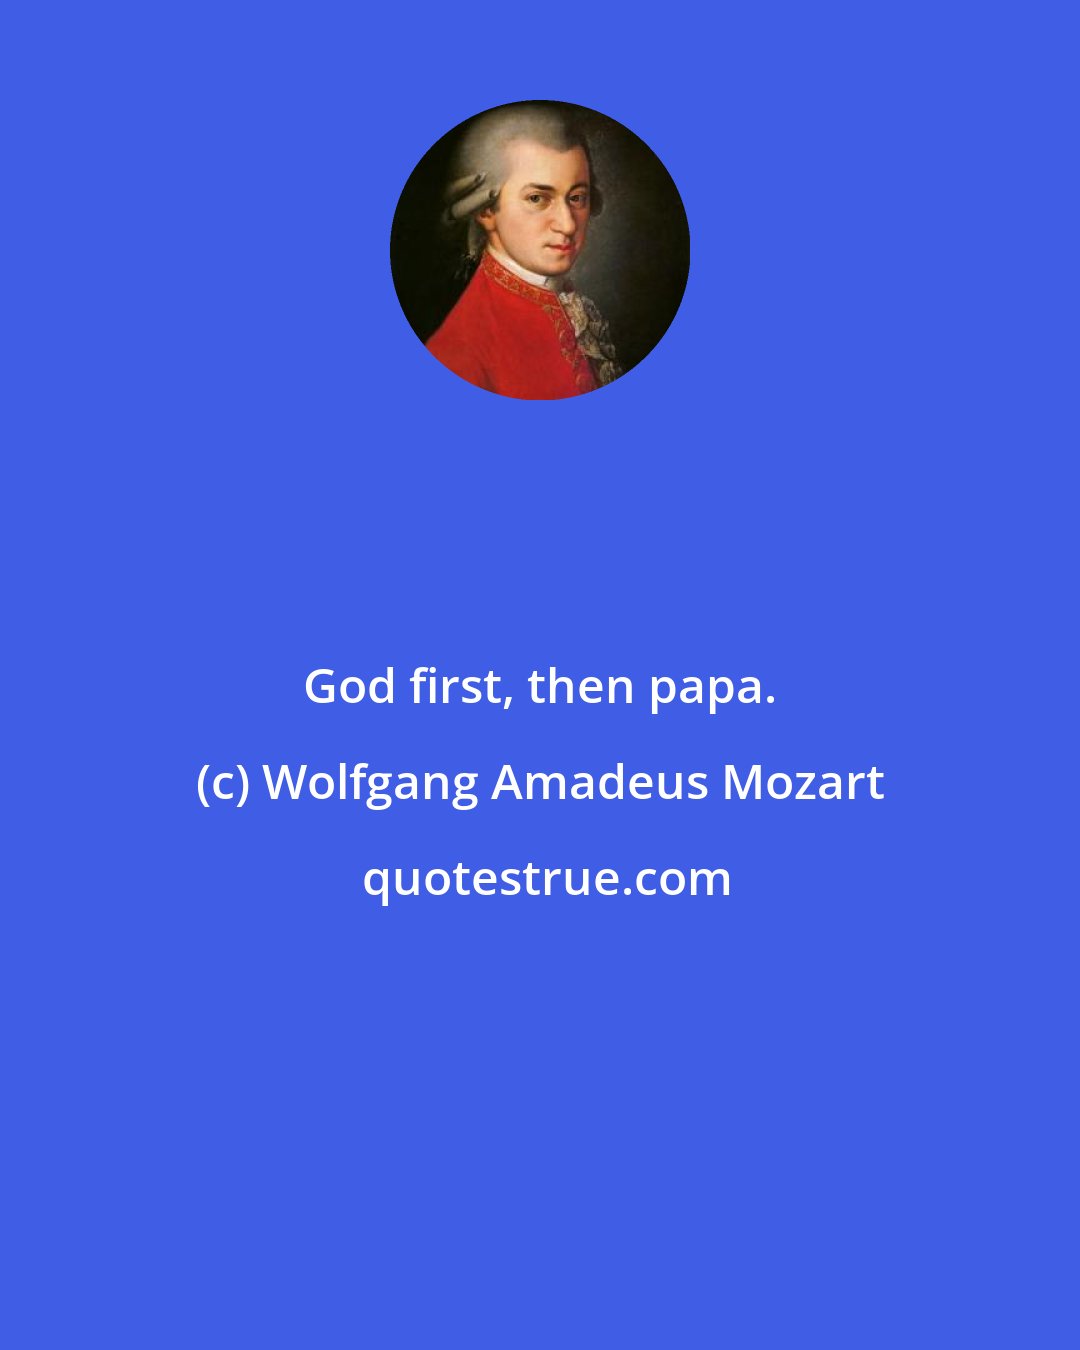 Wolfgang Amadeus Mozart: God first, then papa.